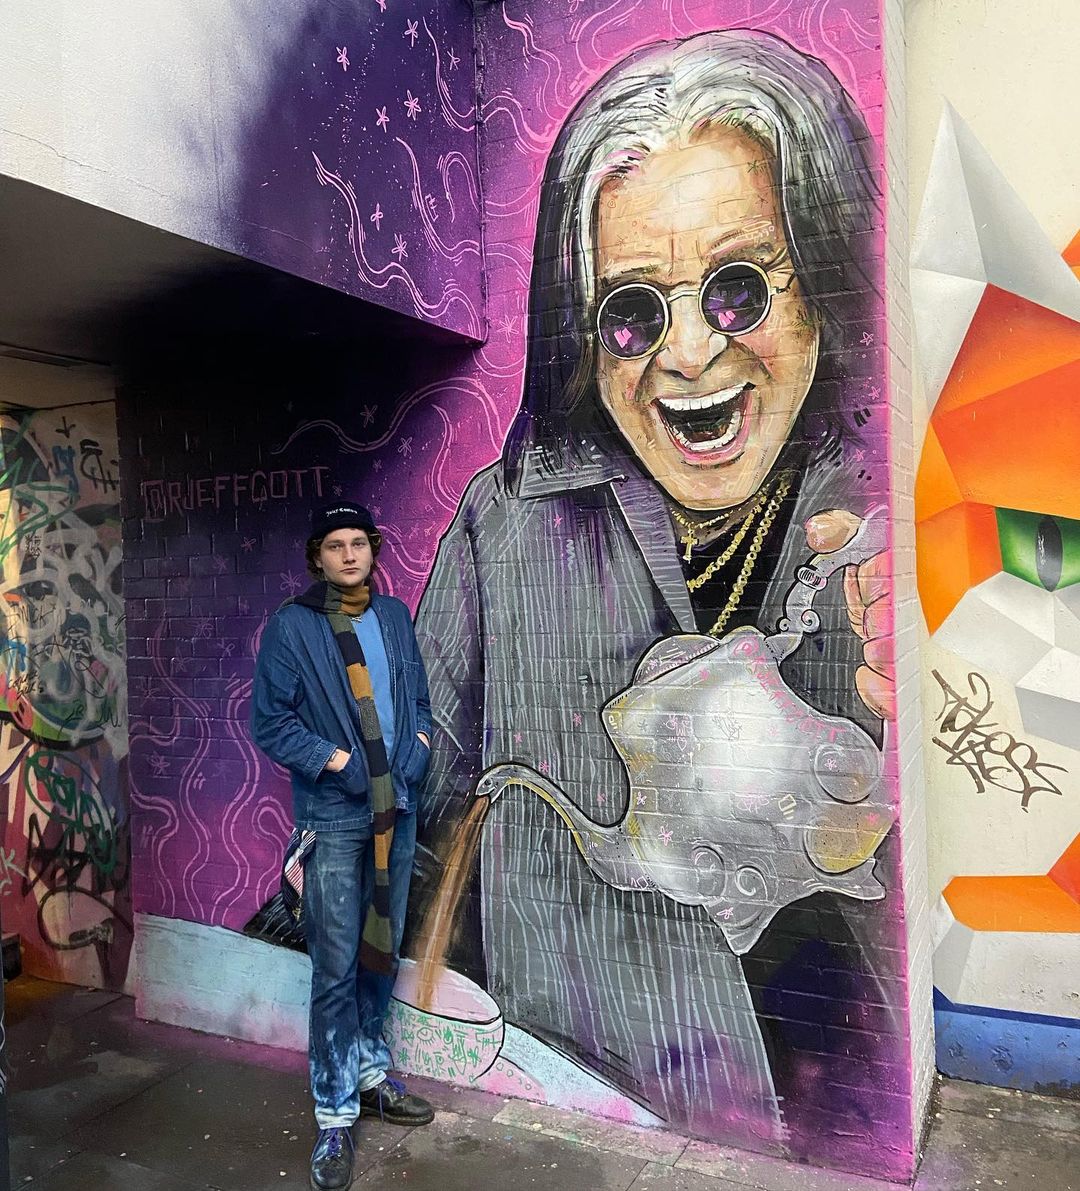 Birmingham graffiti Robbie Jeffcott artist stood next to his Ozzy Osbourne mural 